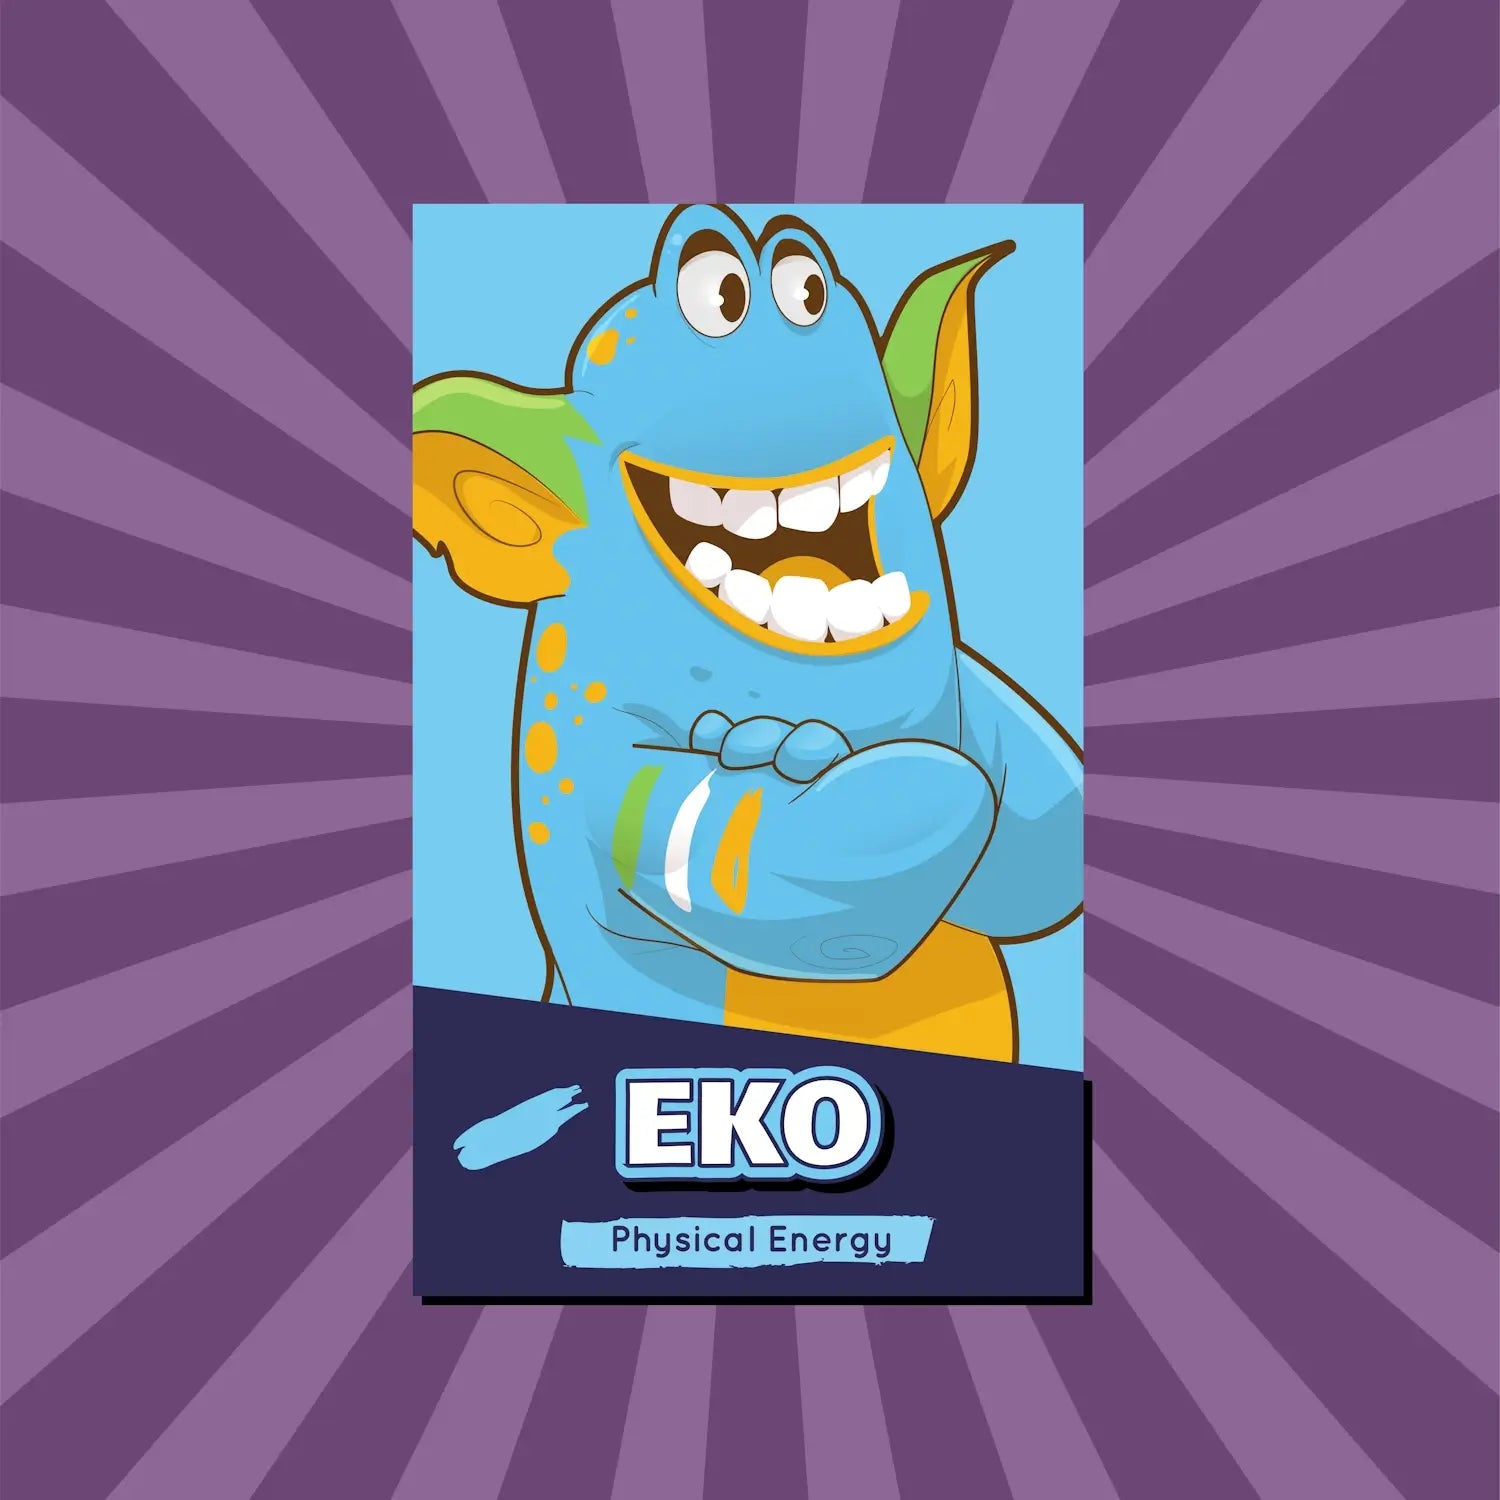 OLOE Character Plush (Eko)